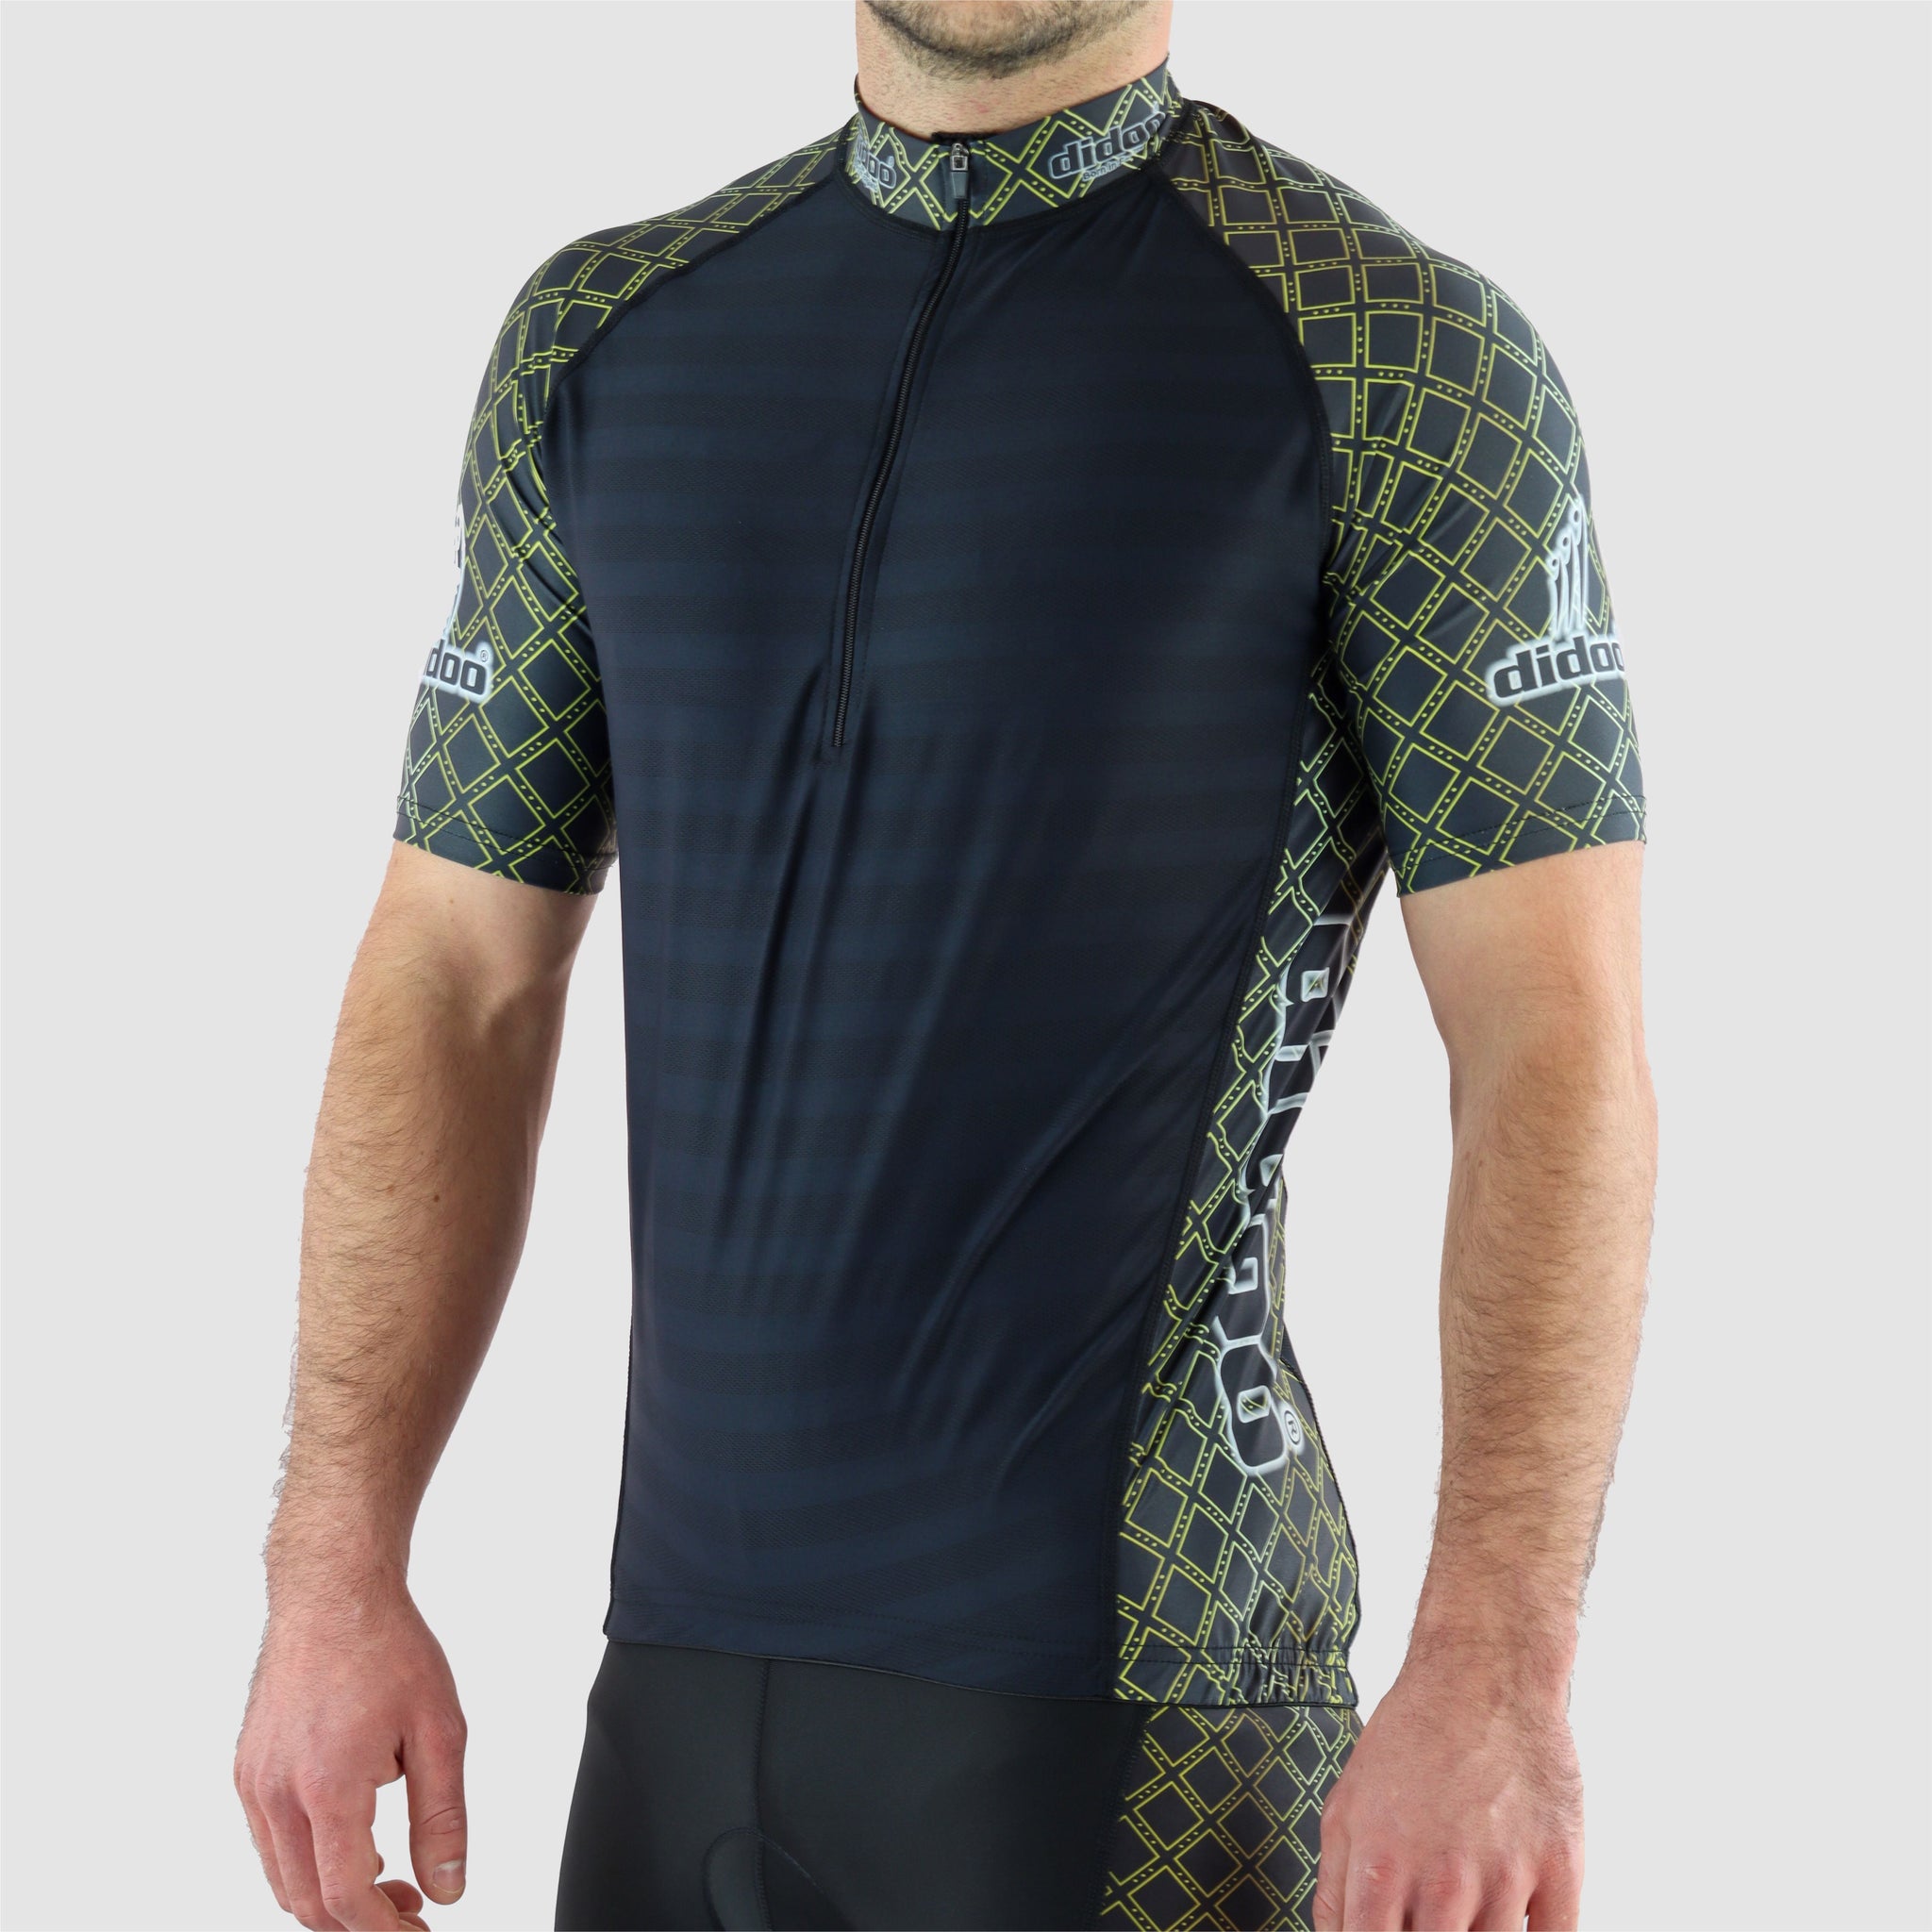 DiDOO Men's Lightweight Half Zip Multi Pockets Short Sleeve Cycling Jersey Black